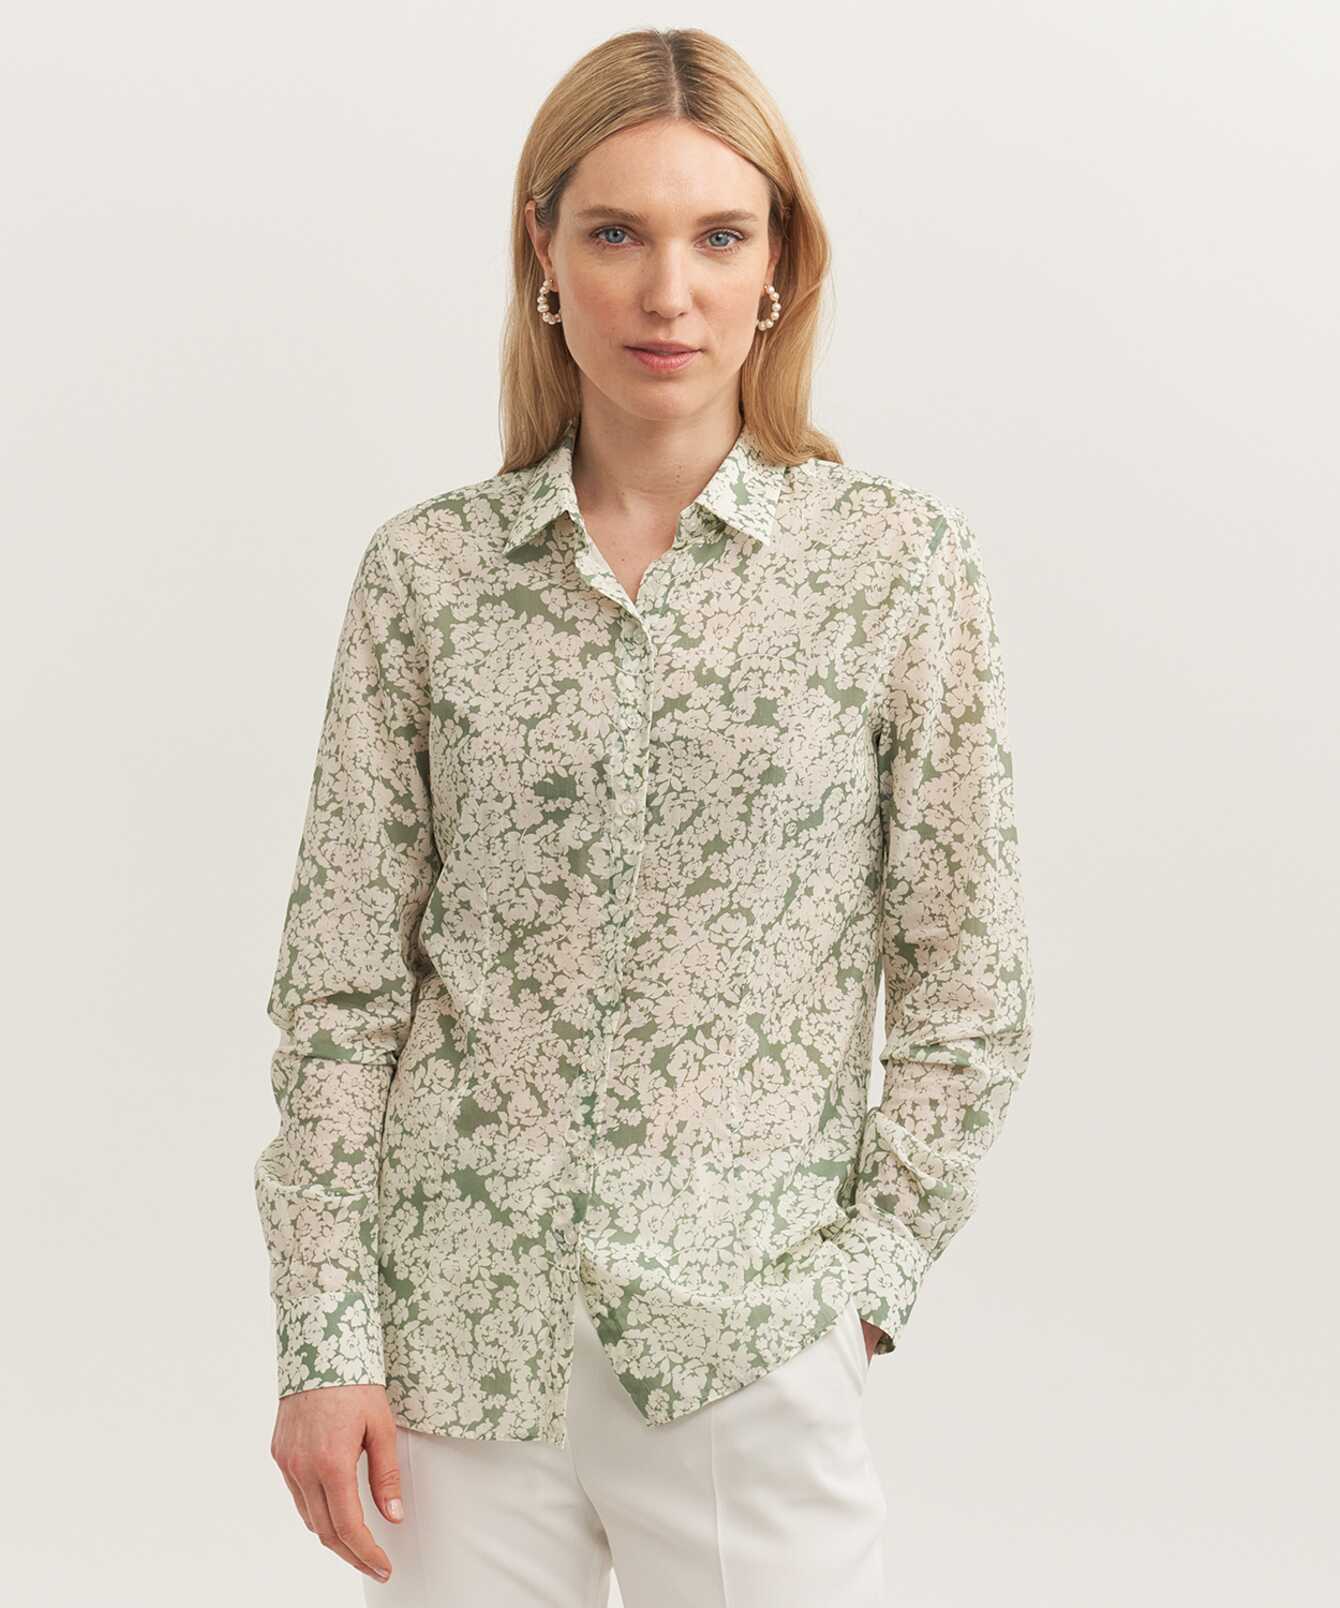 Skjorta Tilde Belleza Grön Blommig Toile Blus The Shirt Factory